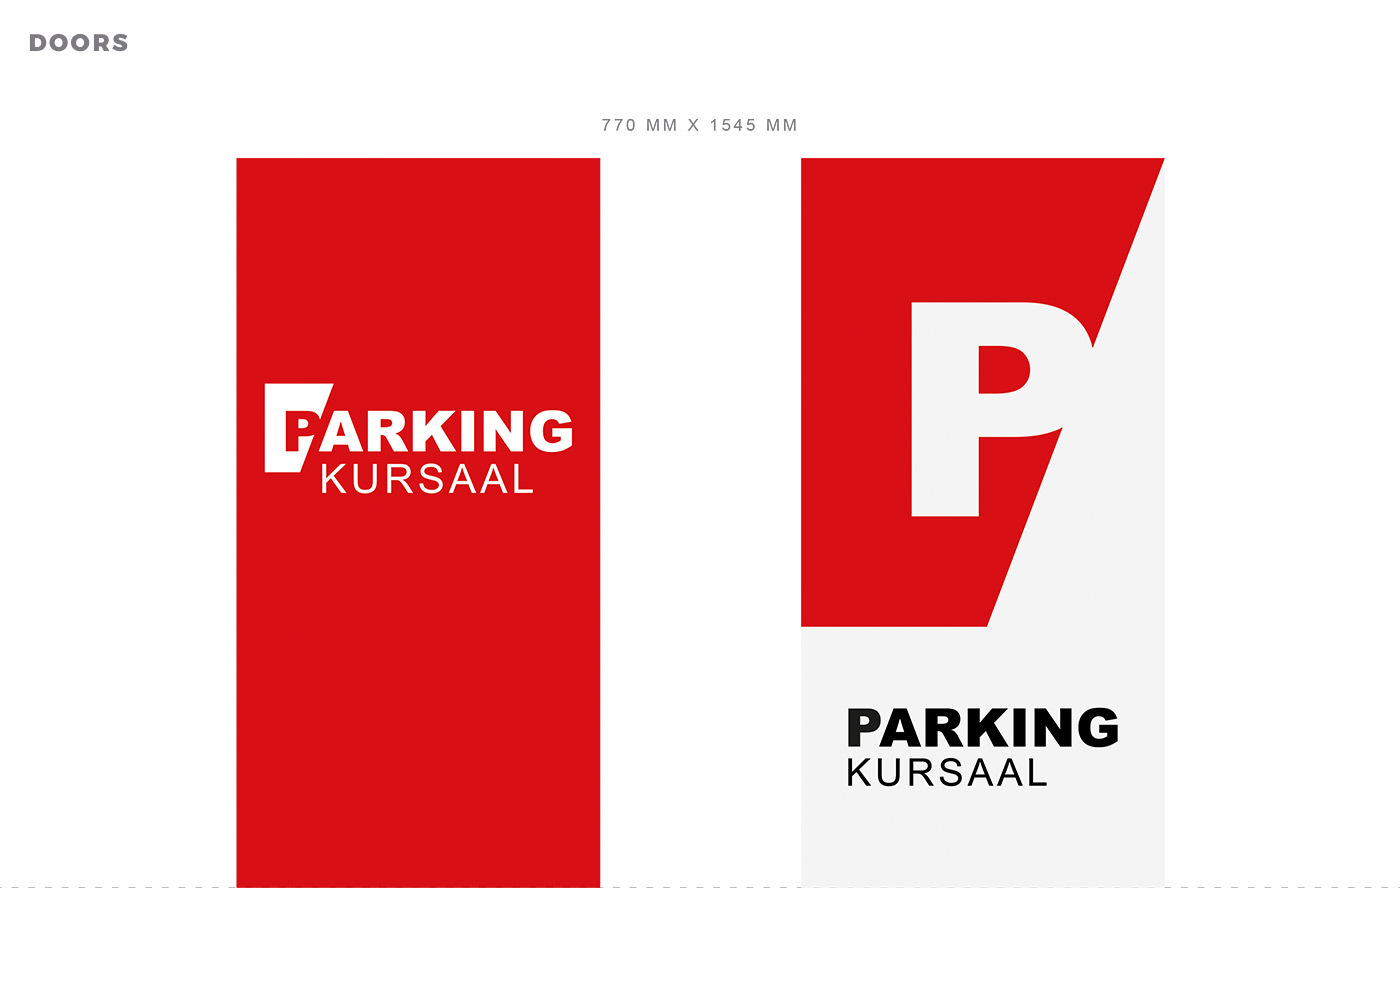 Parking Kursaal entrance doors design